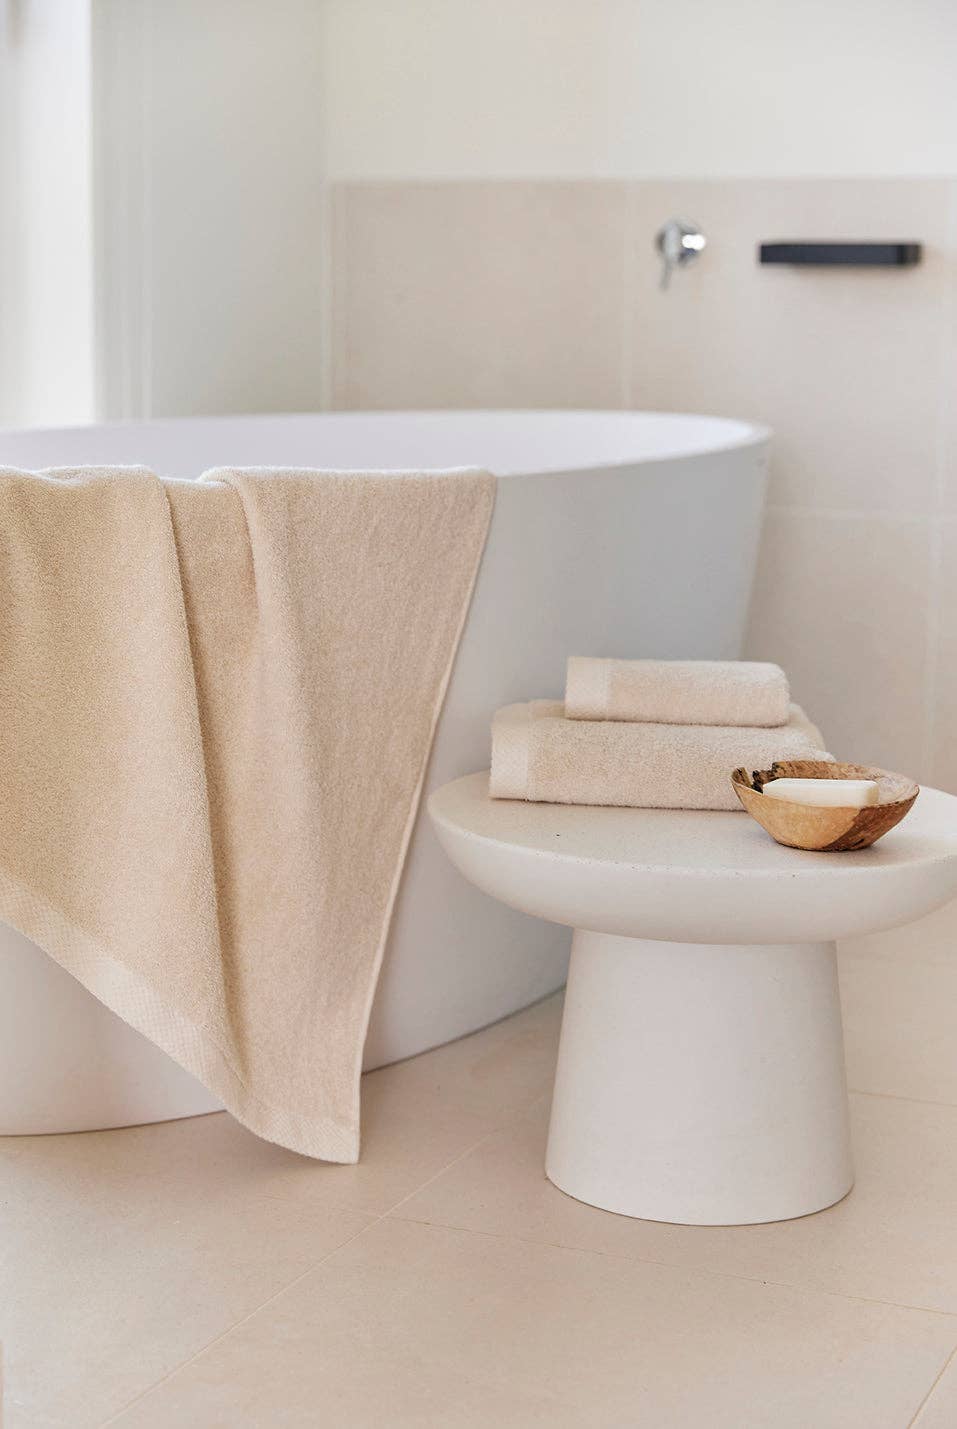 Image of Natural Torres Novas X Zero guest towel in a bathroom setting